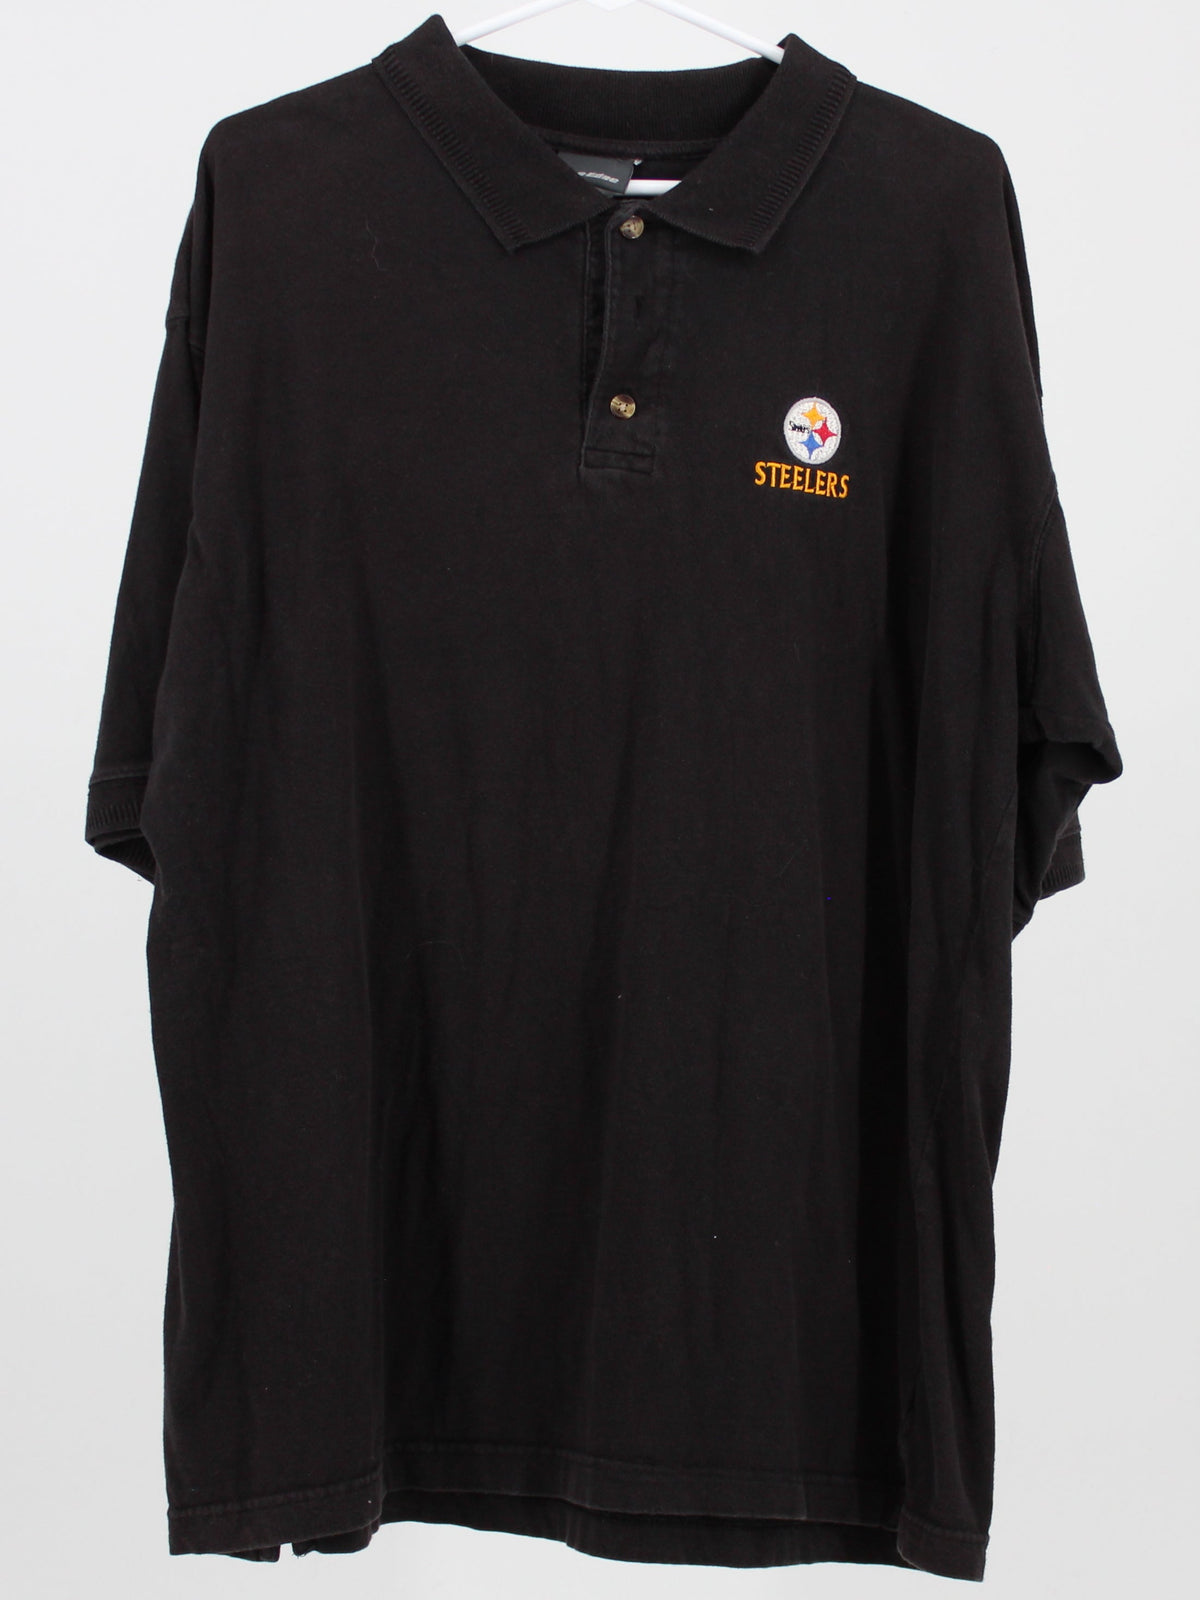 Pittsburgh Steelers Faded Black Golf Shirt